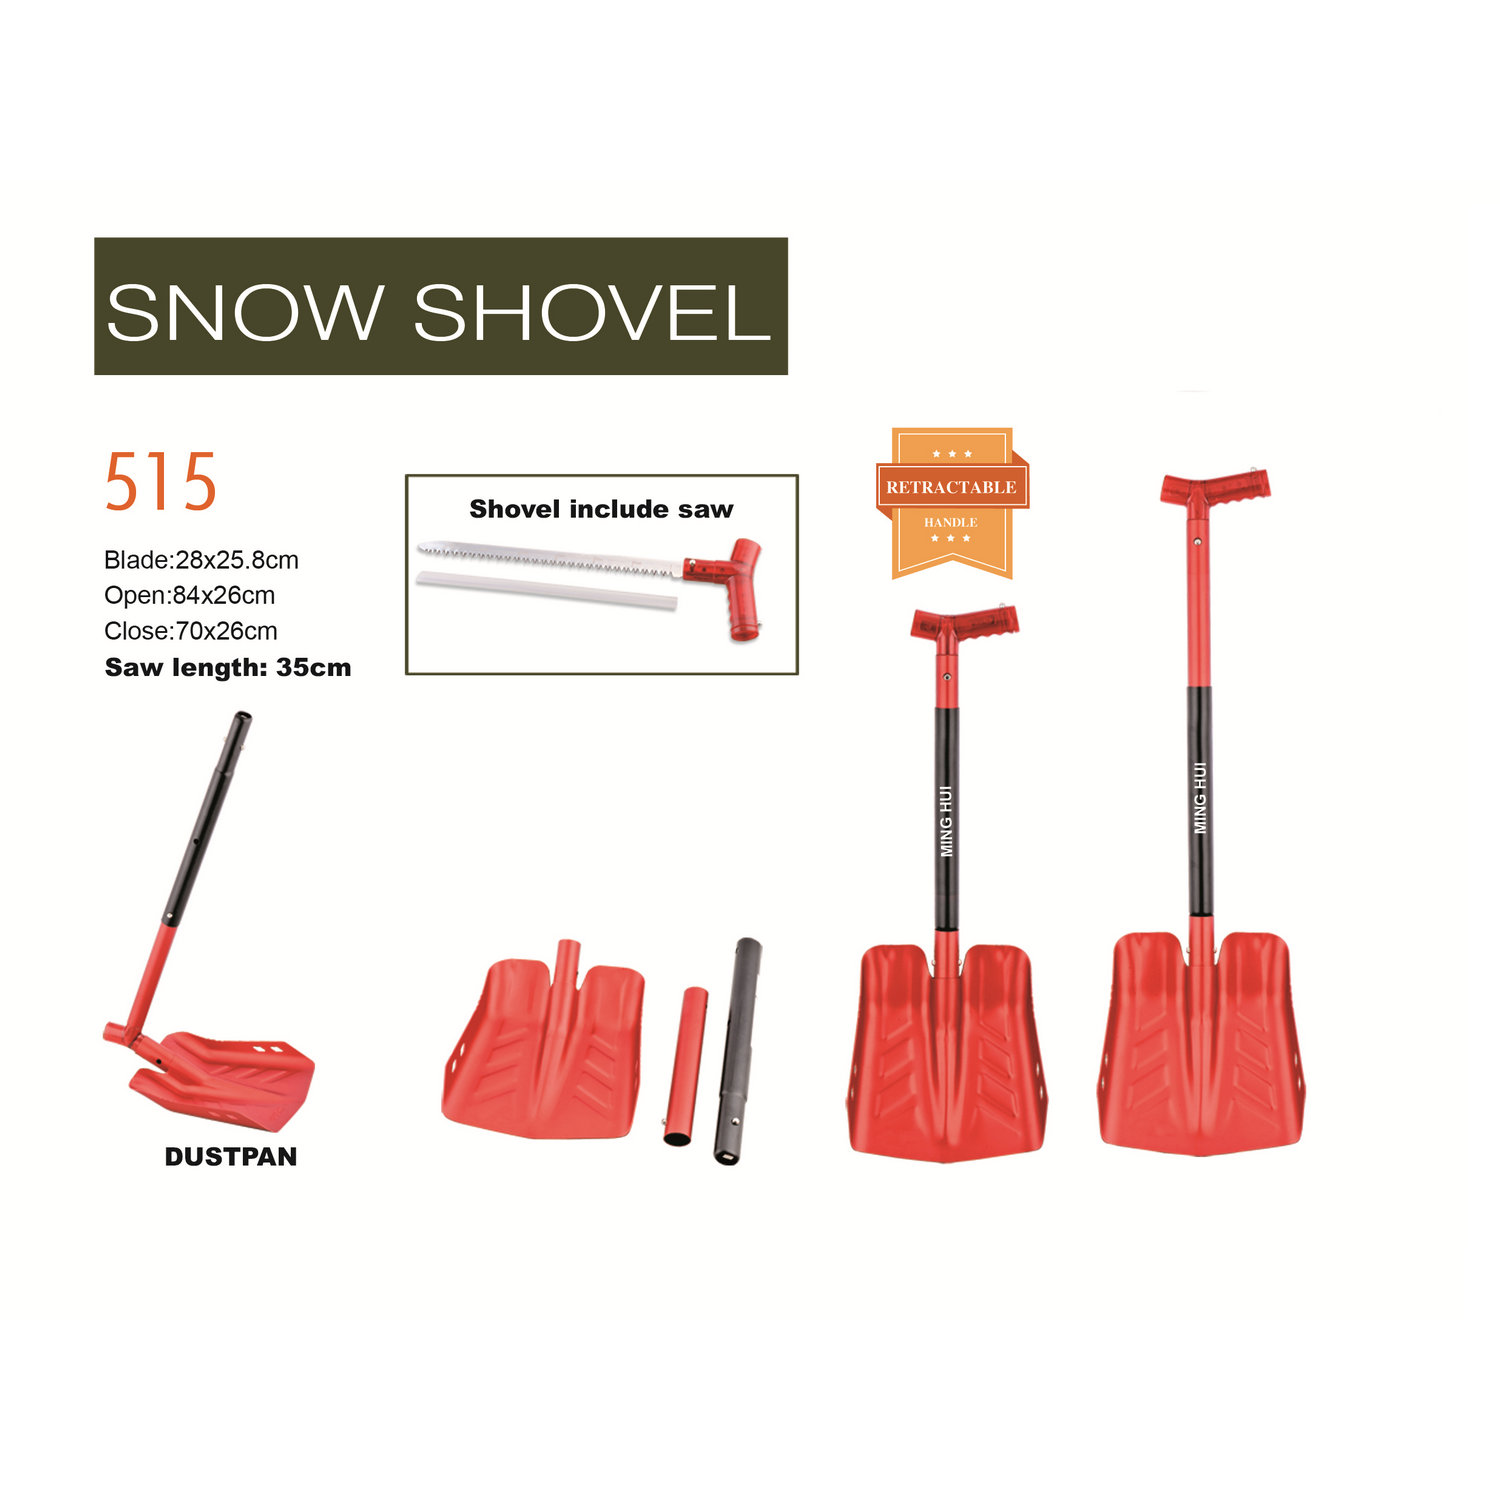 Snow shovel 515